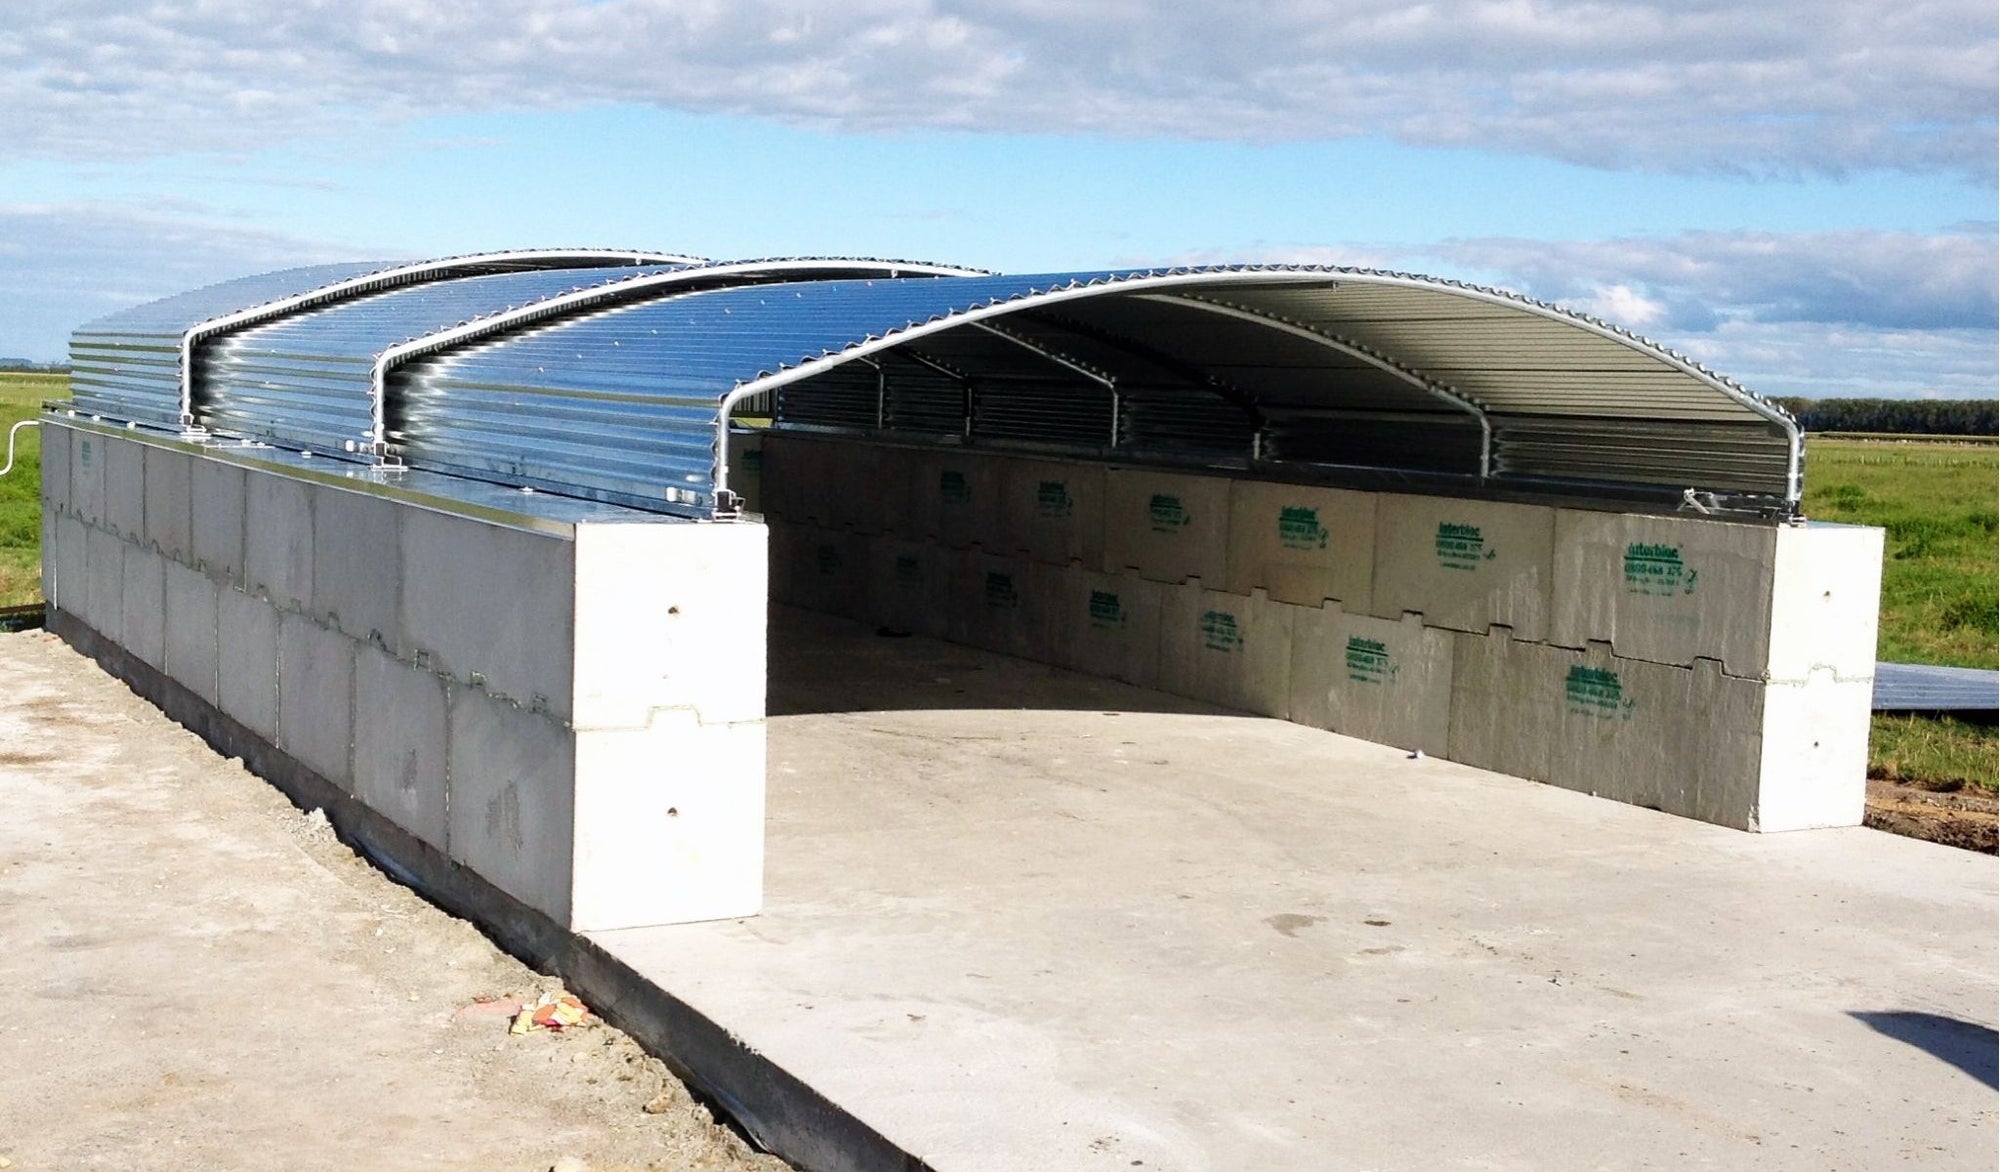 Small Interbloc Fertiliser bin with retractable corrugated aluminum roof